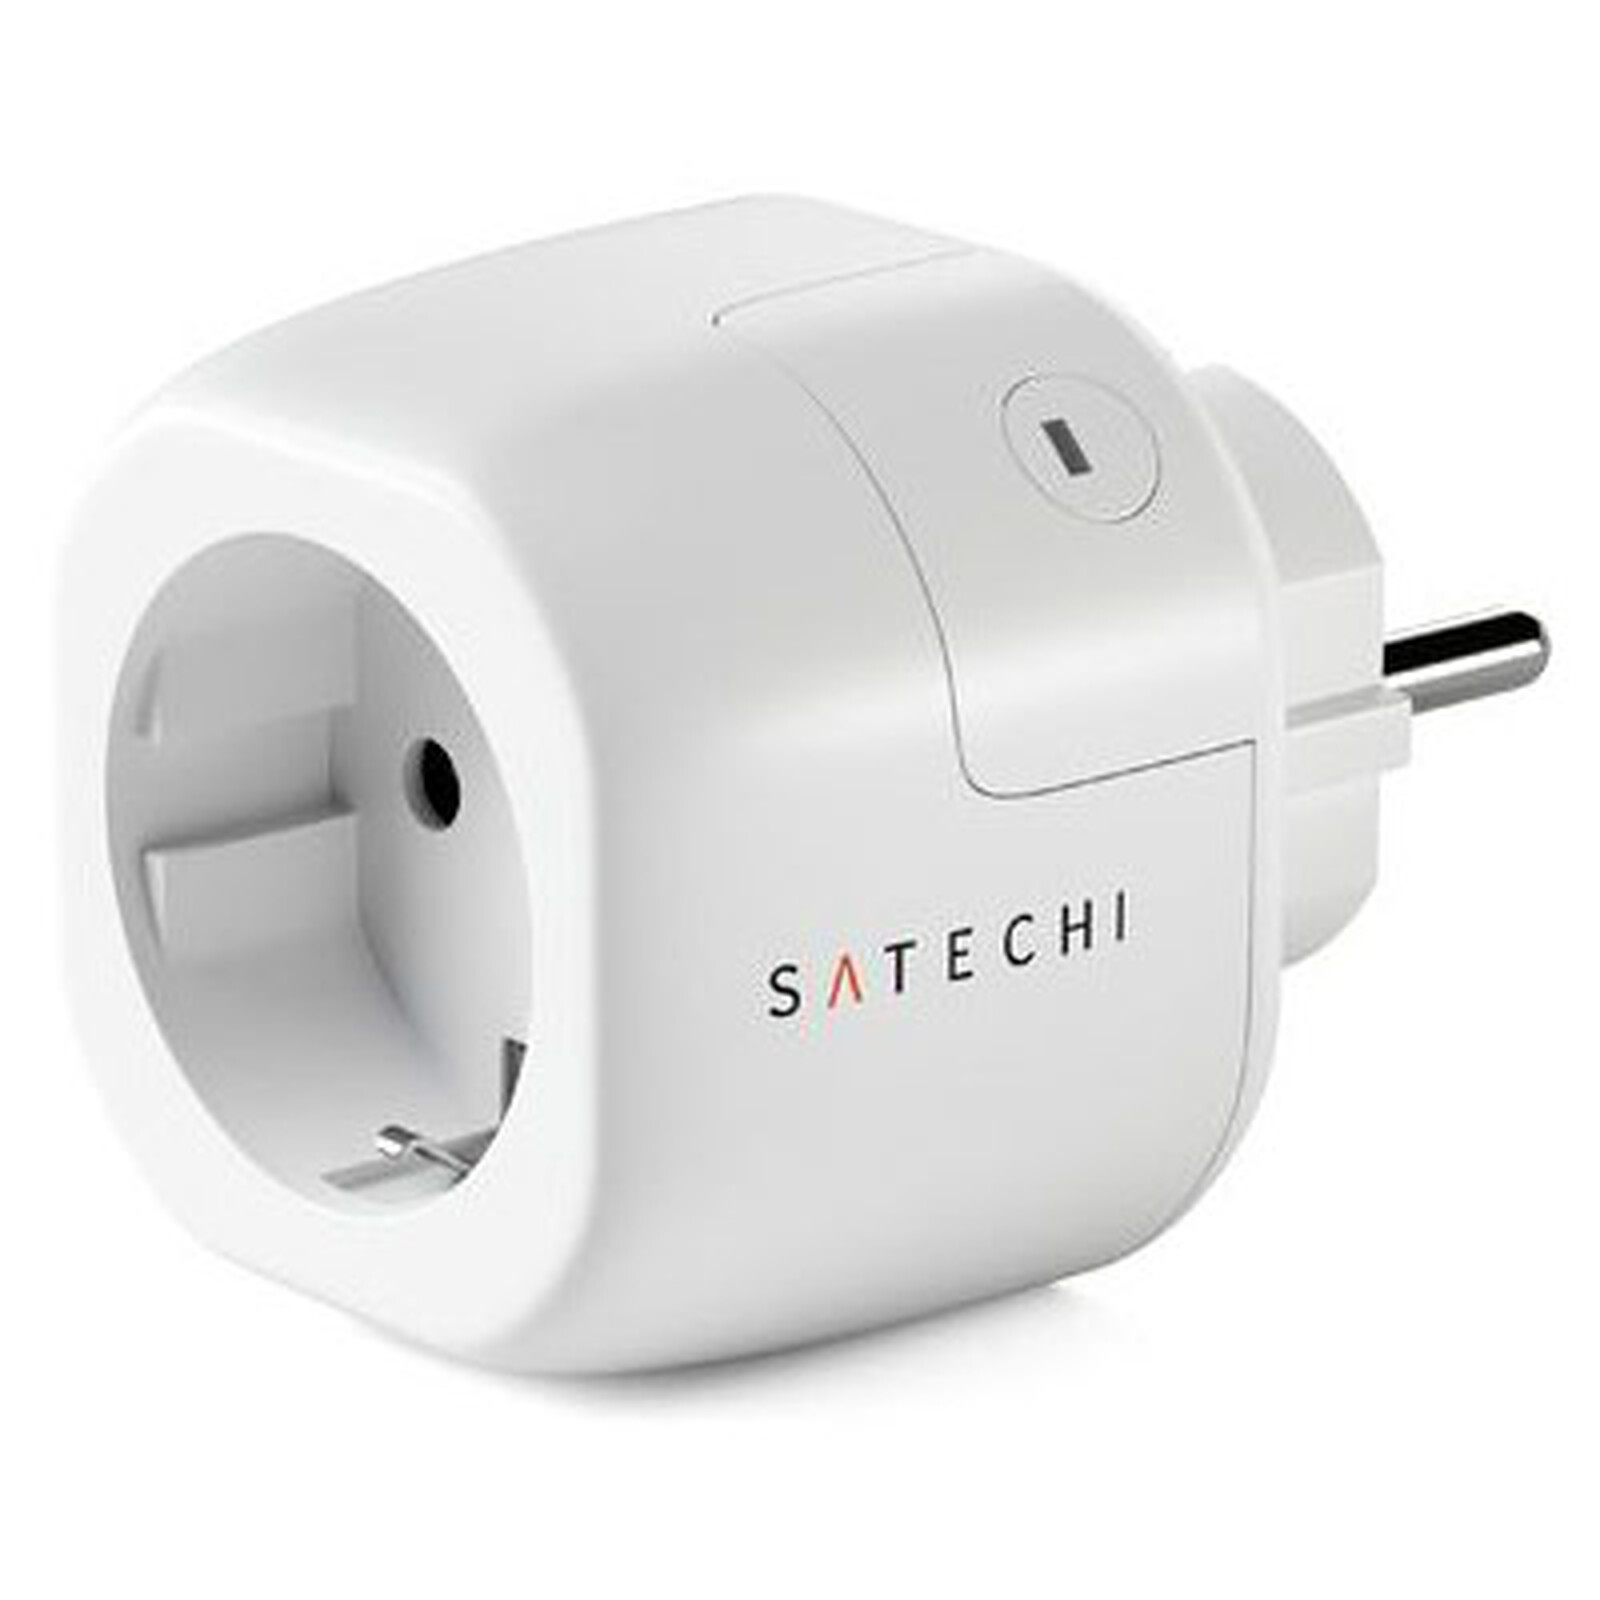 Satechi HomeKit Smart Outlet (UE) - Enchufe Inteligente - LDLC